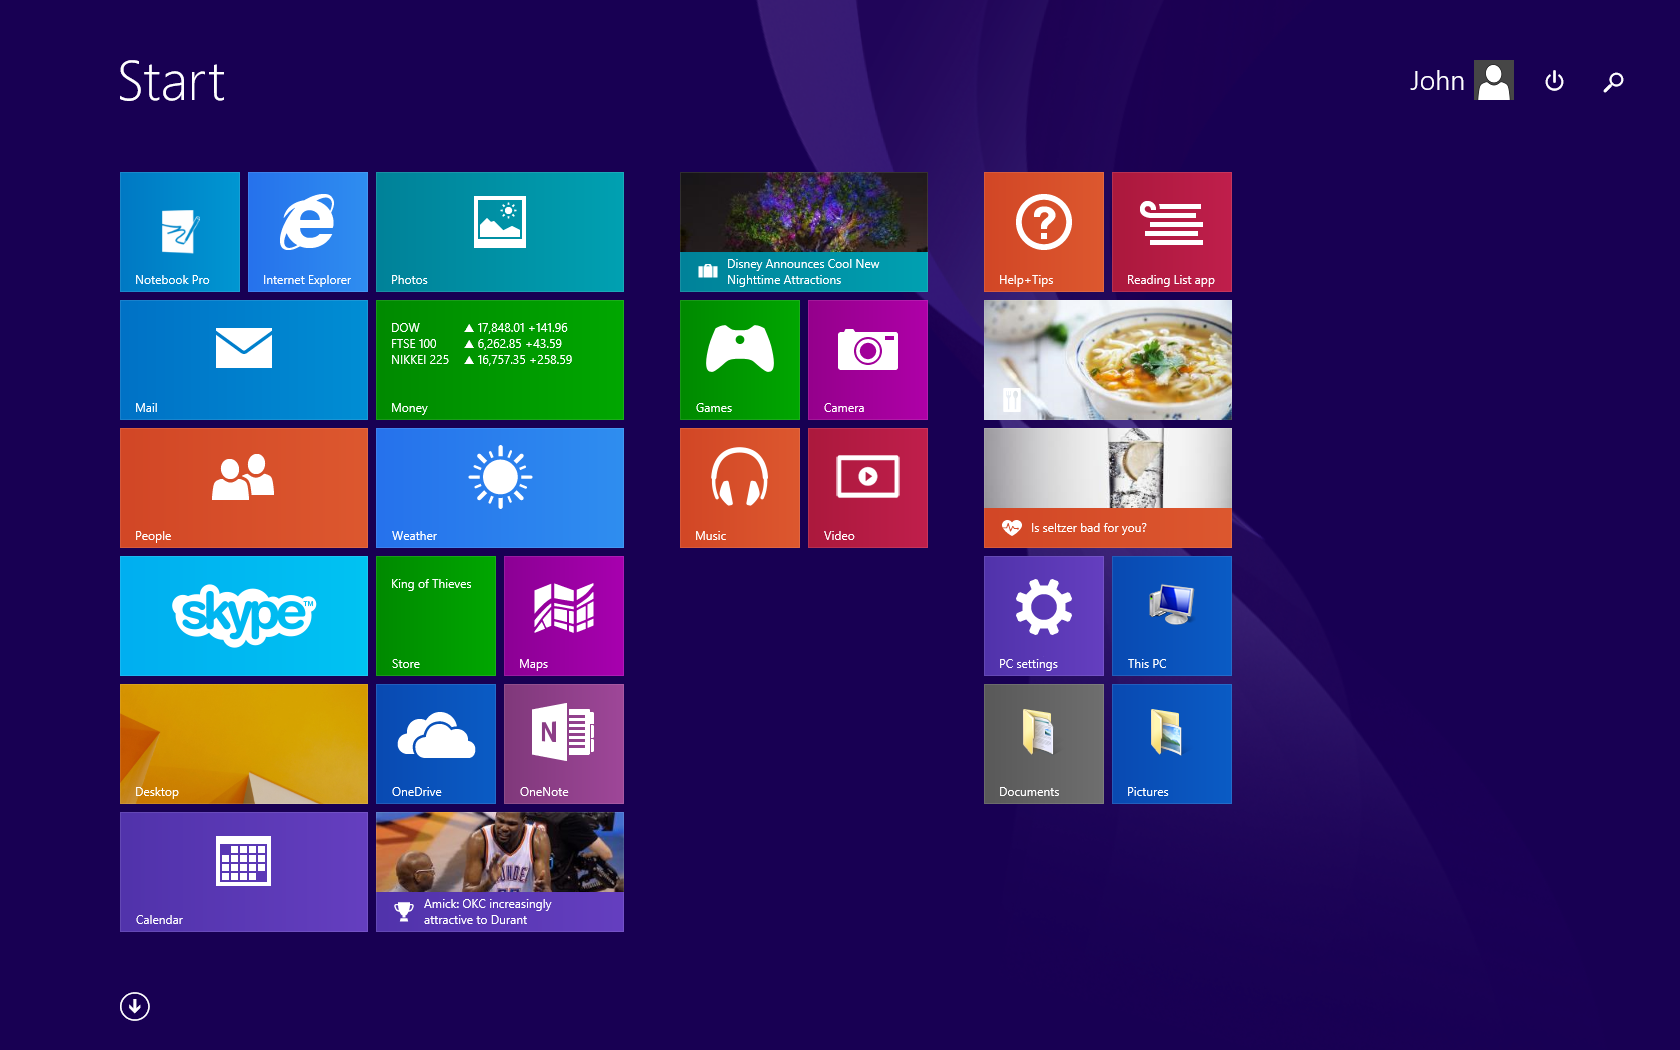 Notebook Pro 2.0 on Windows 8.1